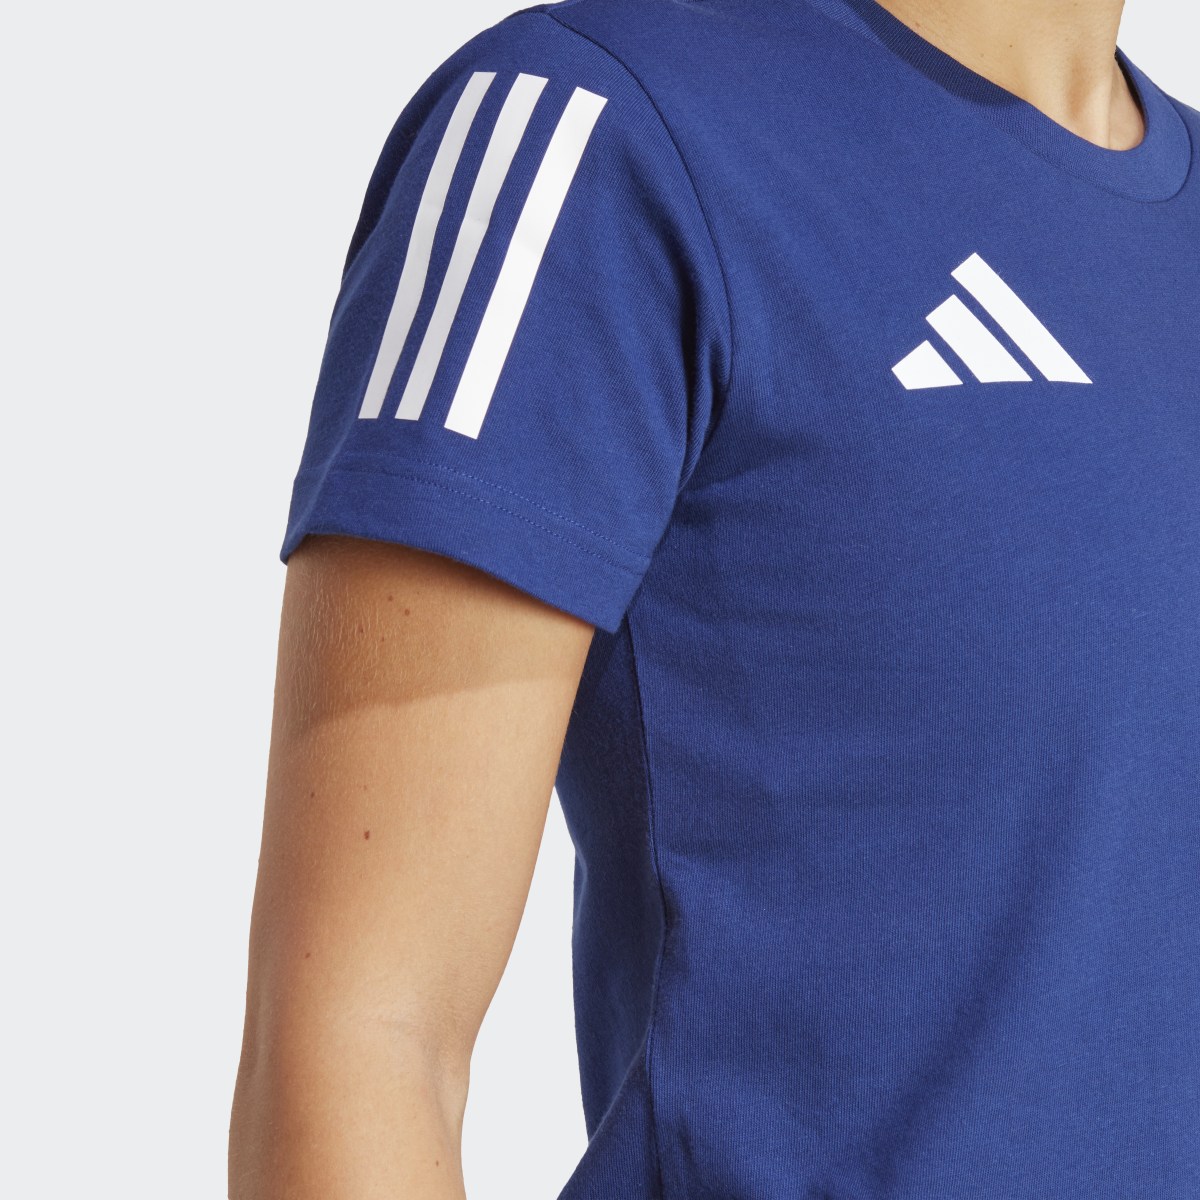 Adidas France Cotton Graphic T-Shirt. 6